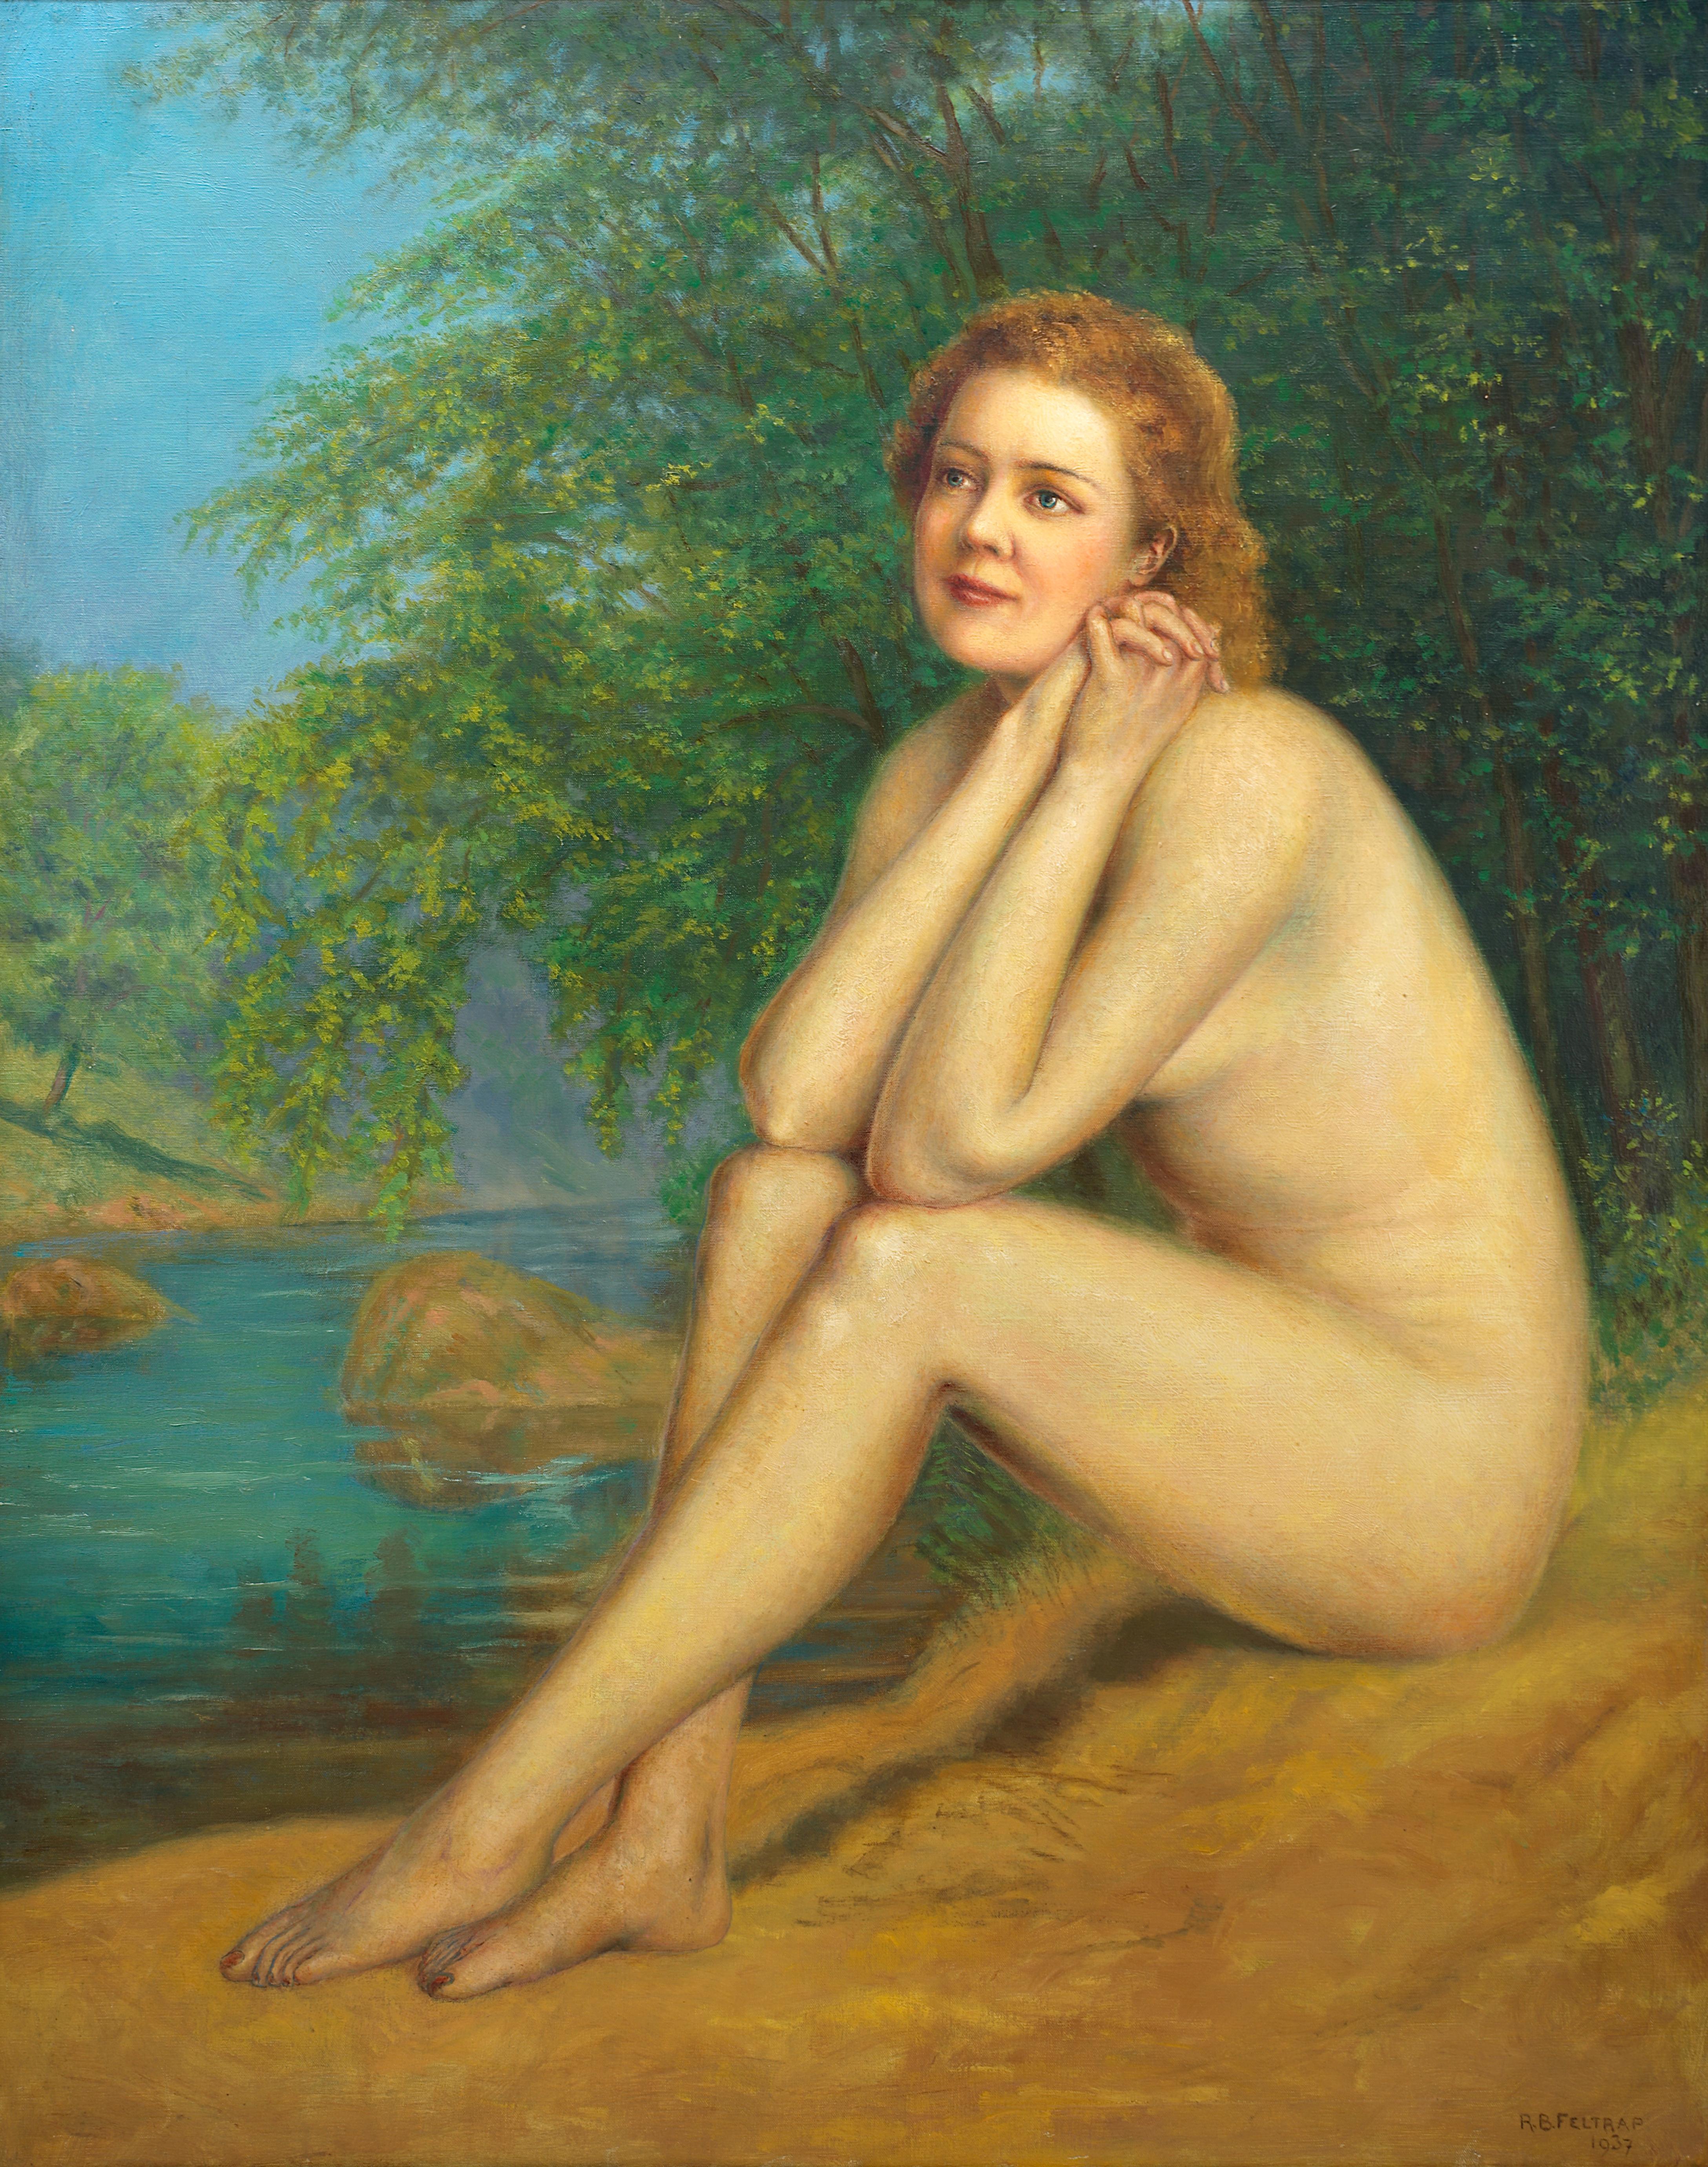 R.B. FELTRAP, Oil on canvas, Nude, 1937 - Painting by R. B. Feltrap